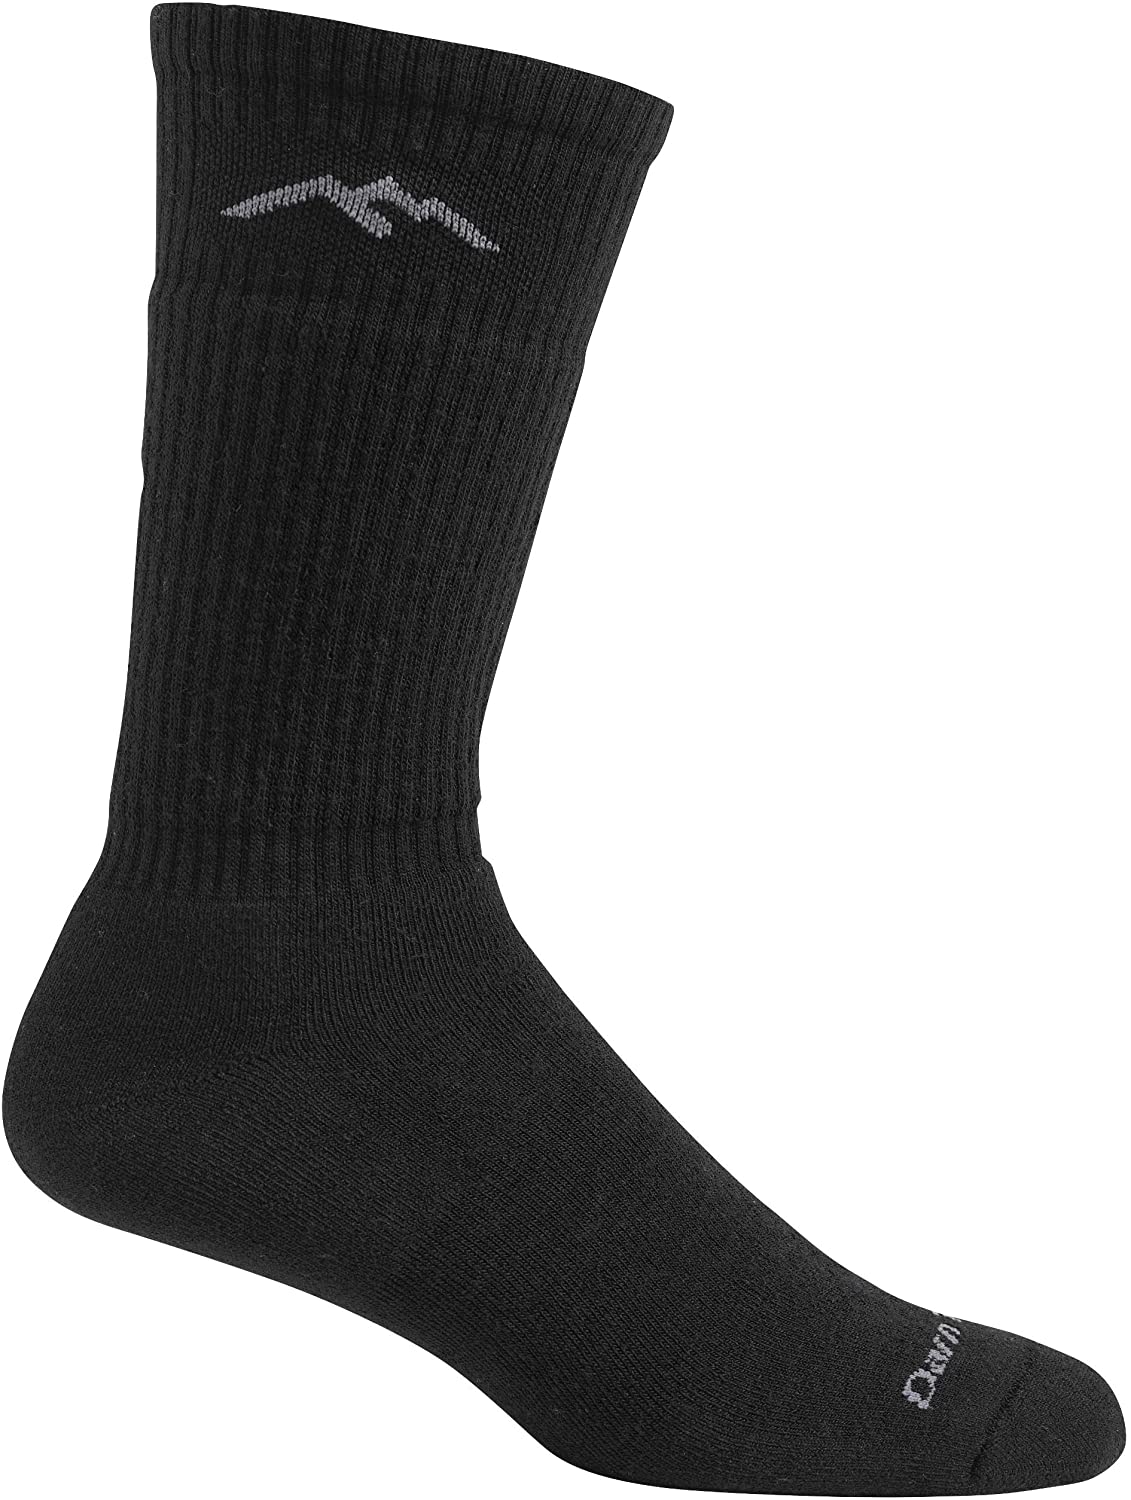 Men's Darn Tough Standard Mid-Calf Lightweight Sock in Black